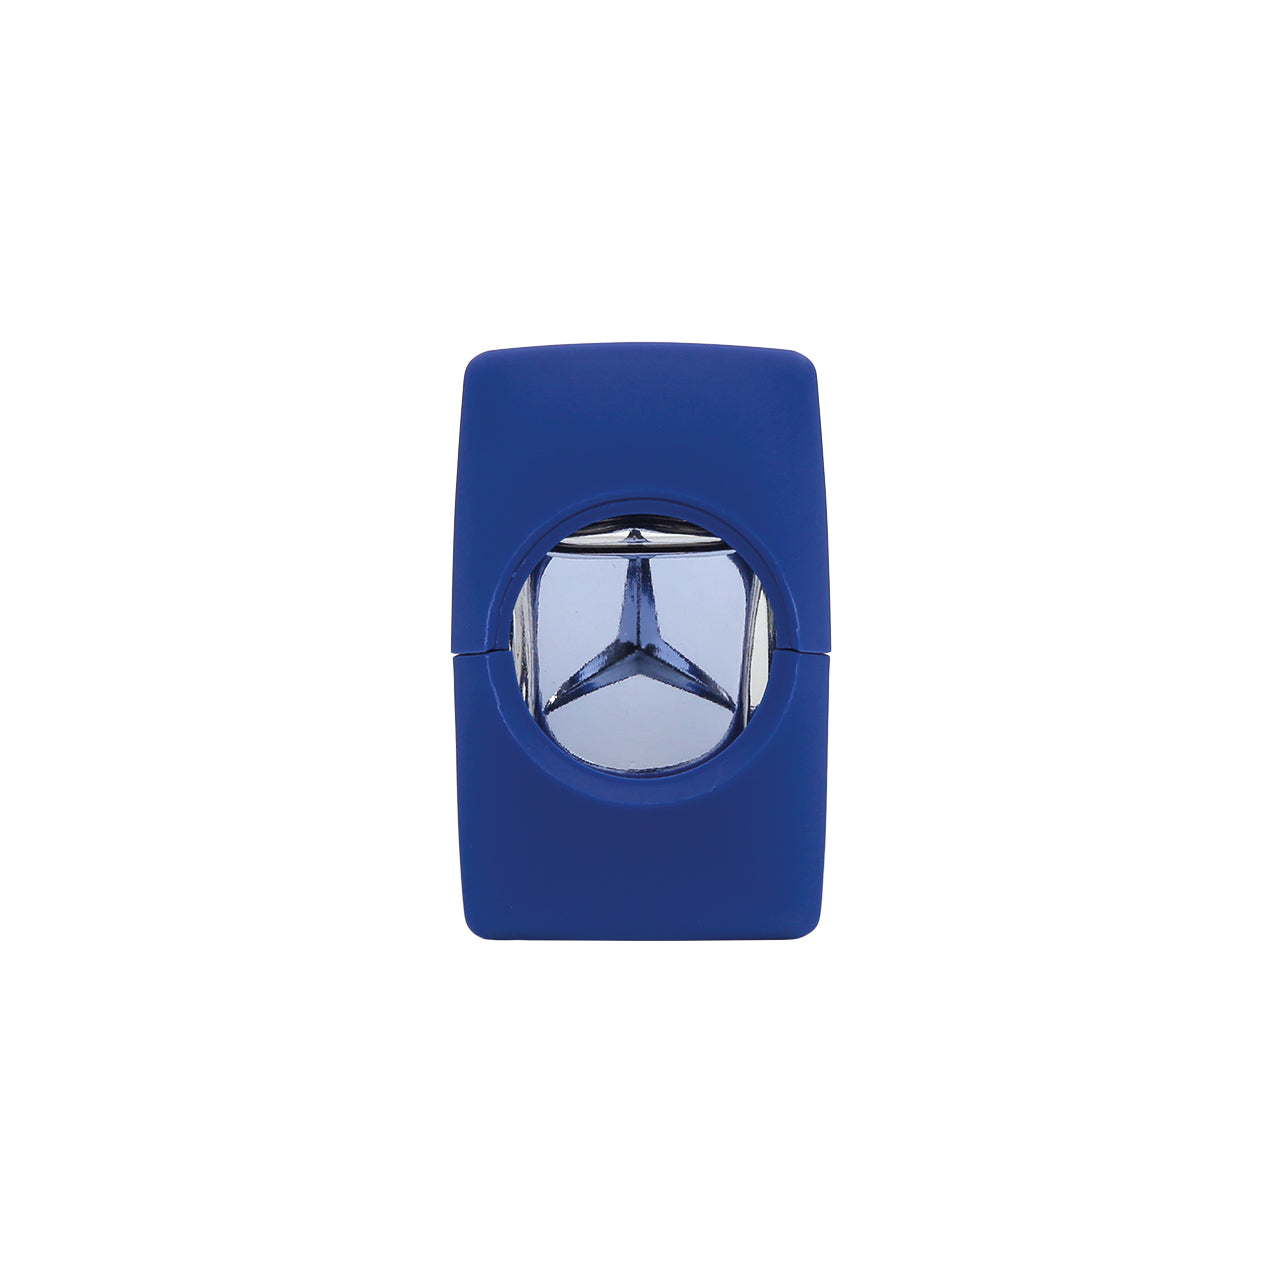 Mercedes Benz Man Blue Mni Eau de Toilette 5ml